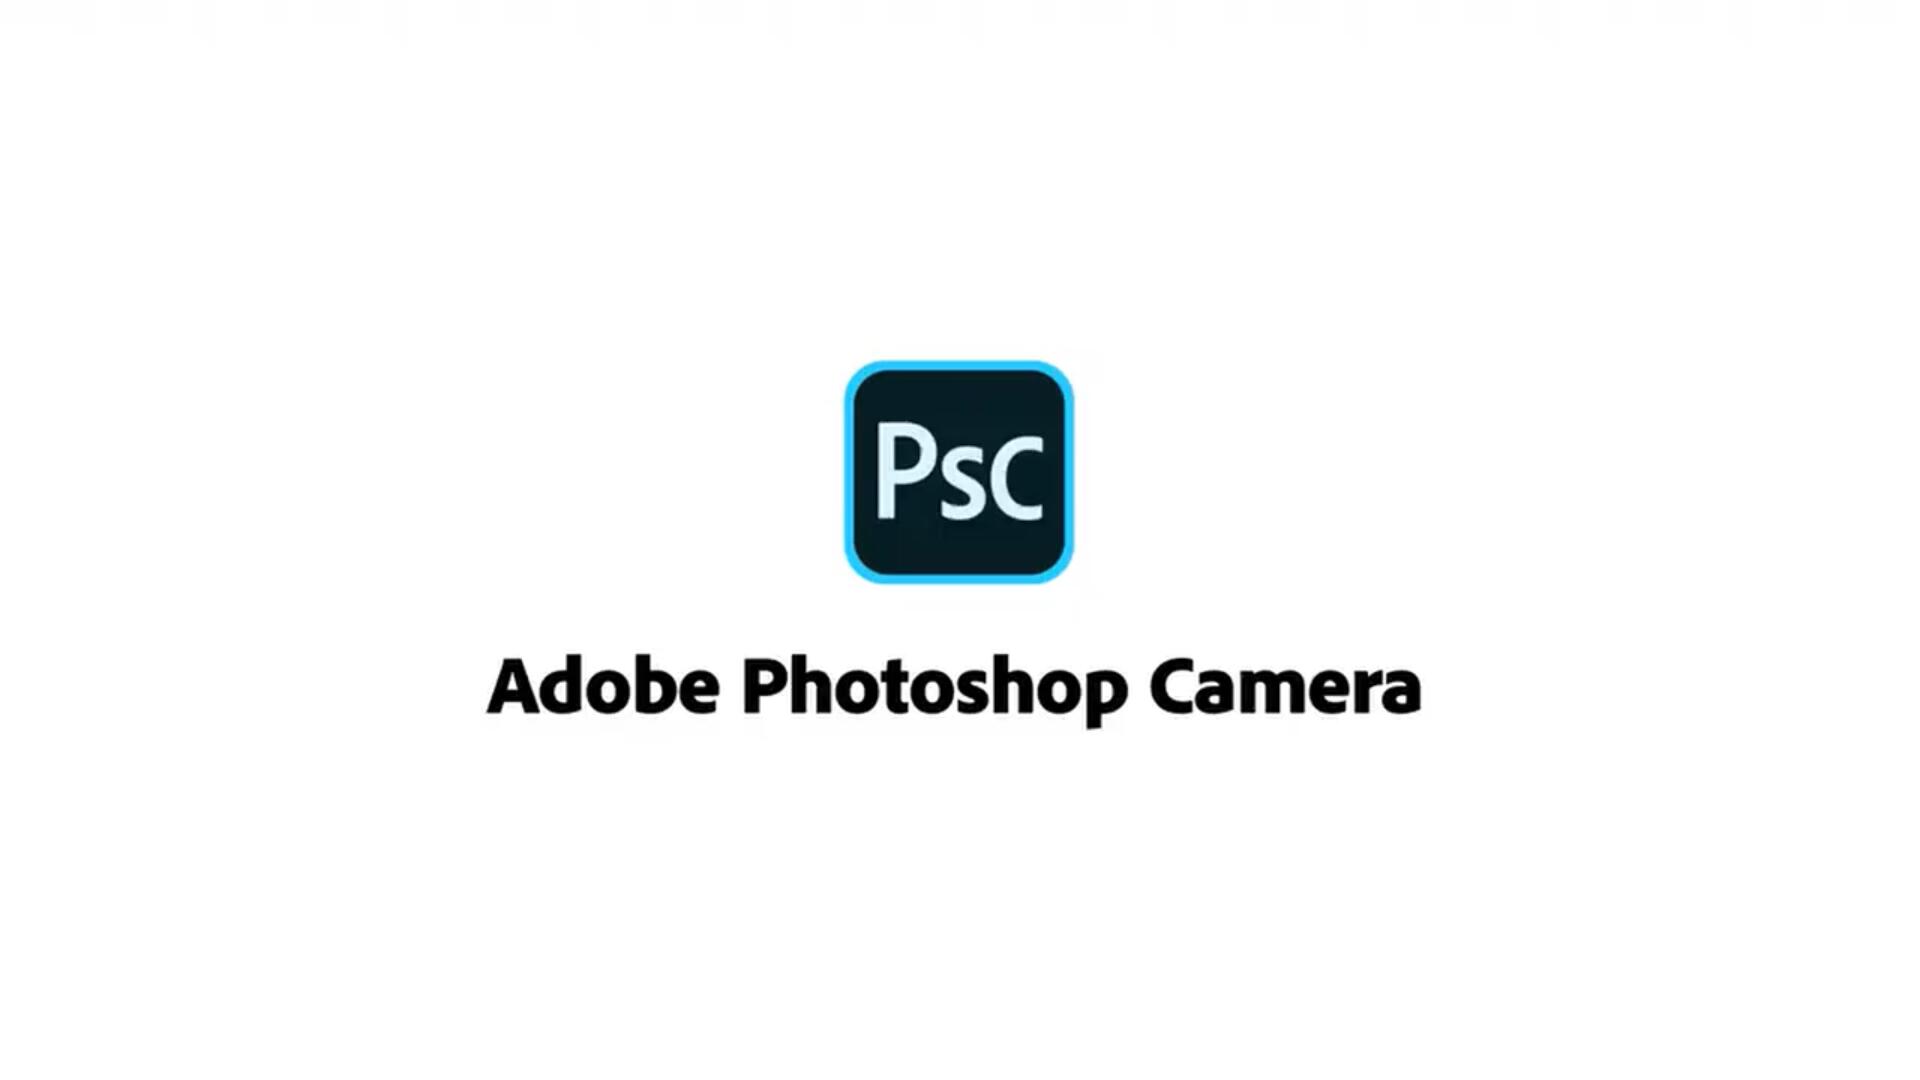 Photoshop Camera